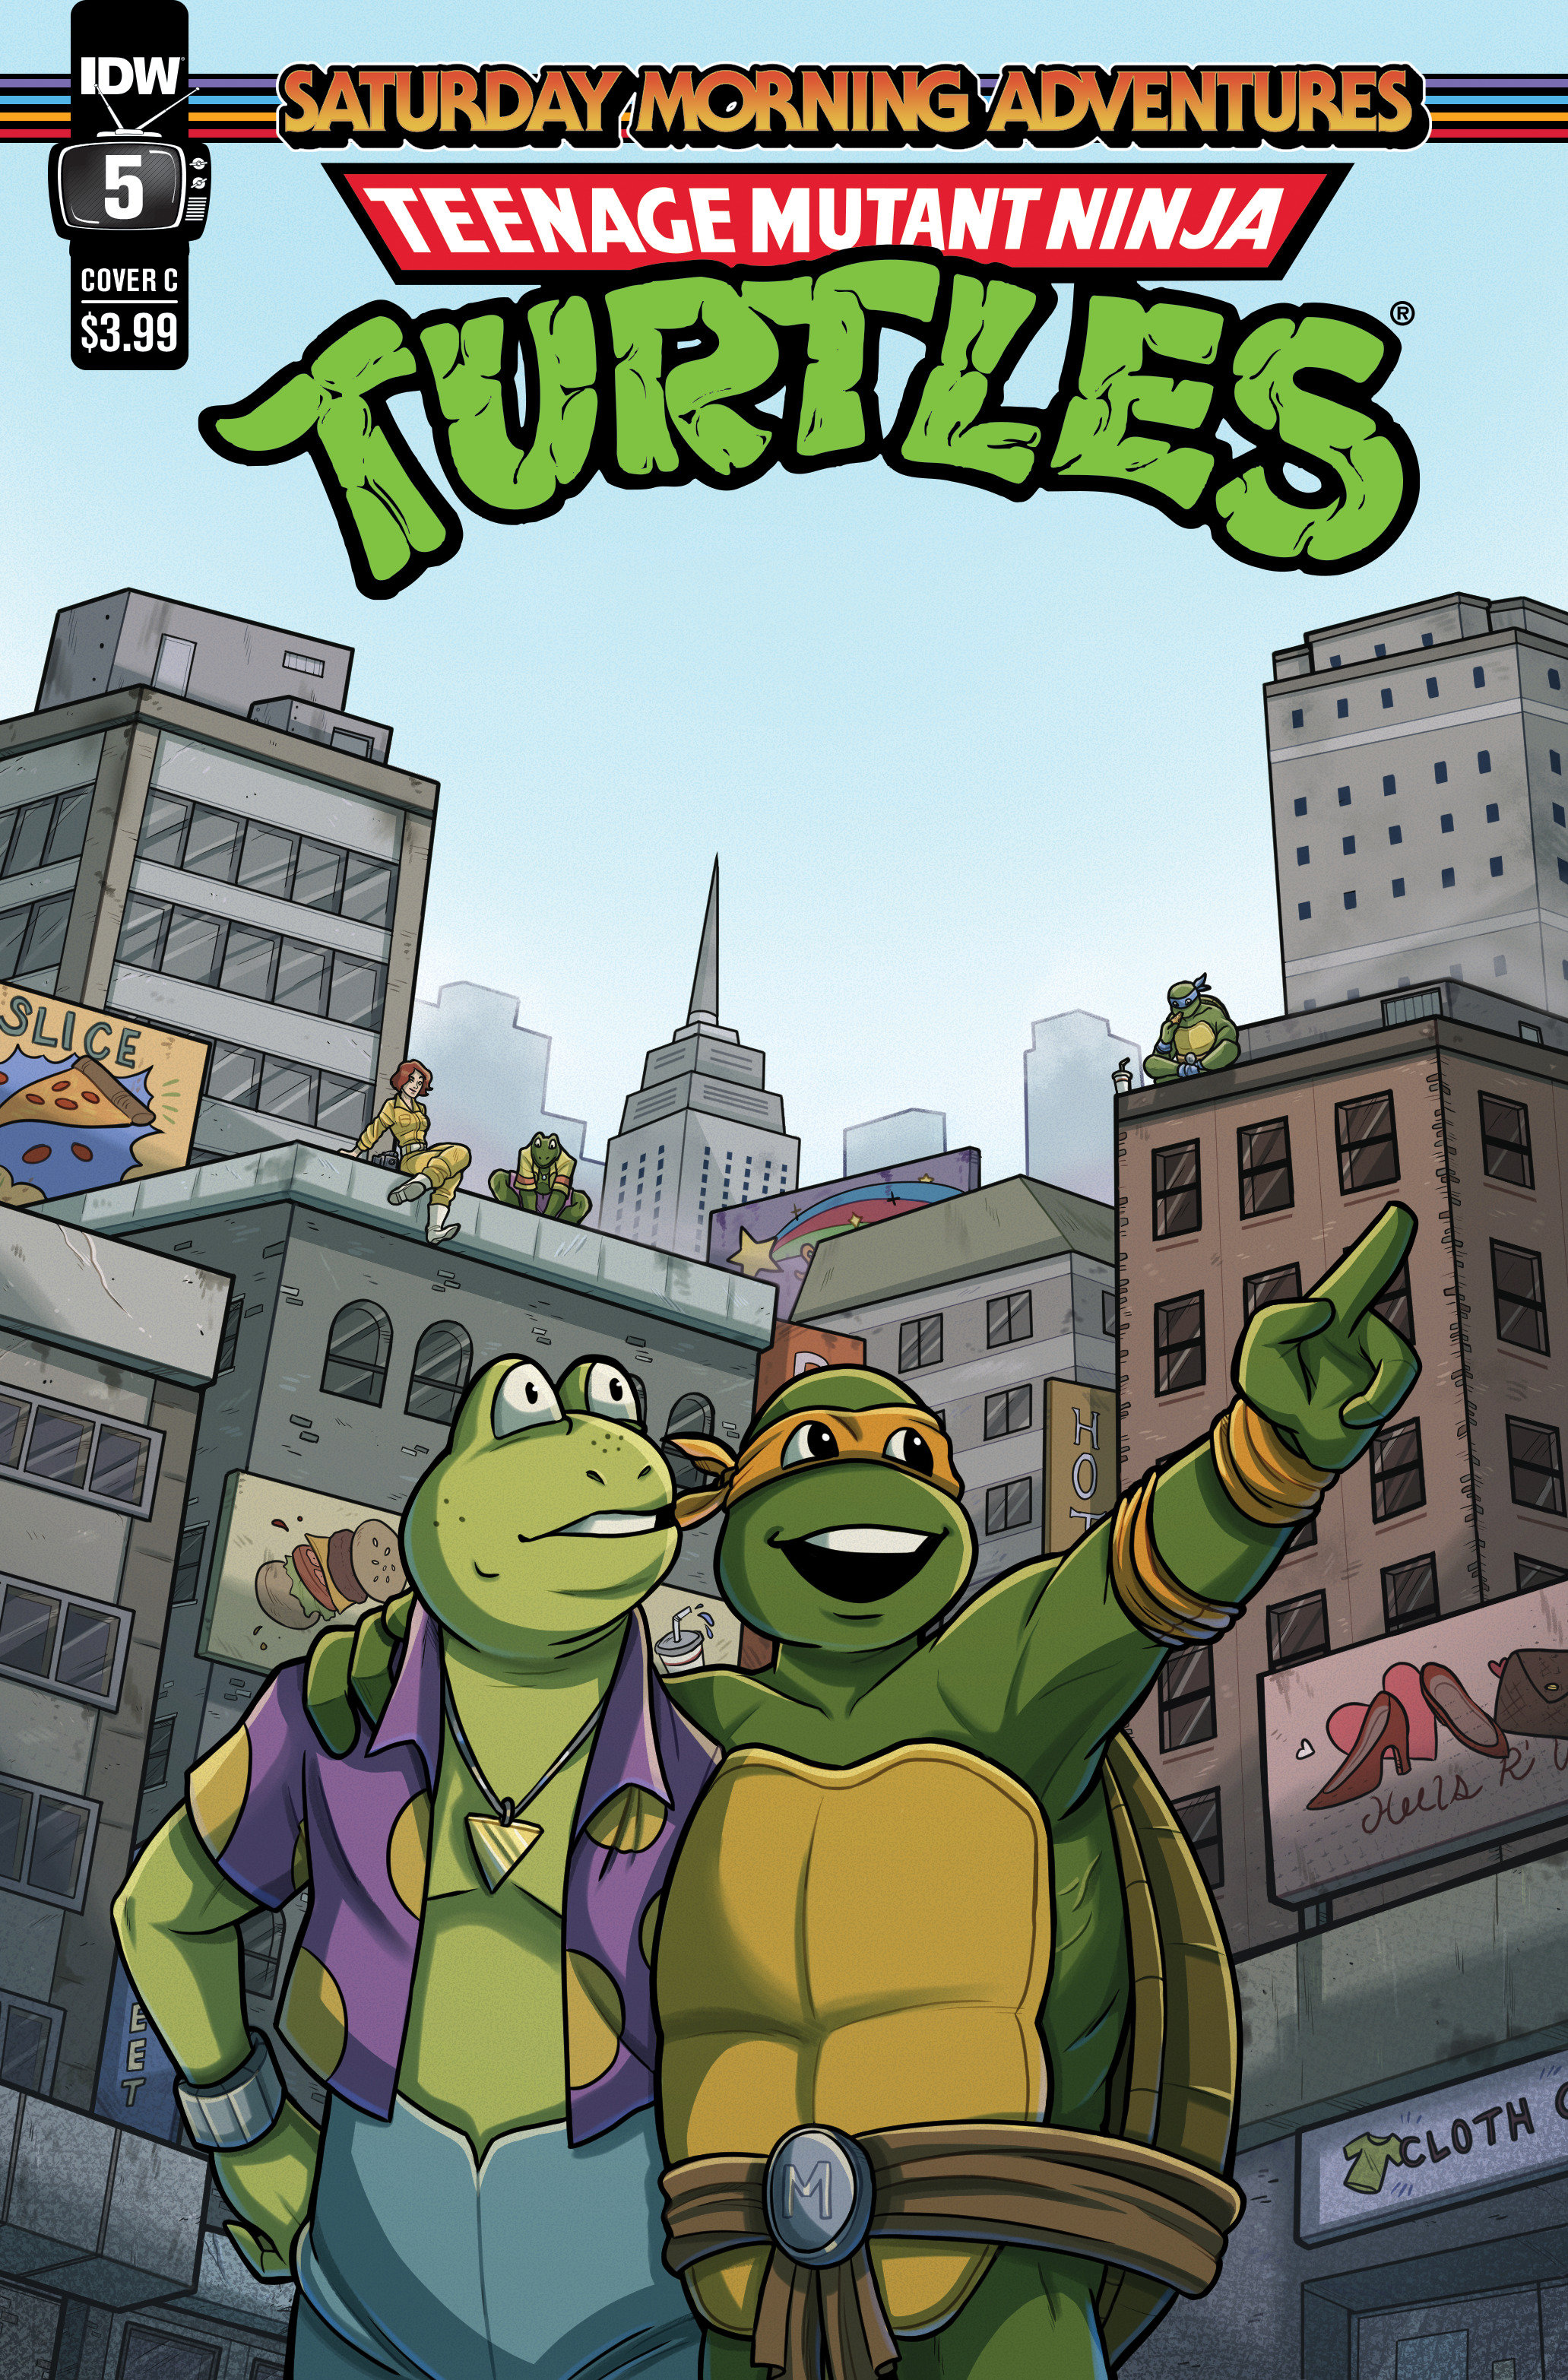 Teenage Mutant Ninja Turtles Saturday Morning Adventures Continued! #5 Cover C Suntrup